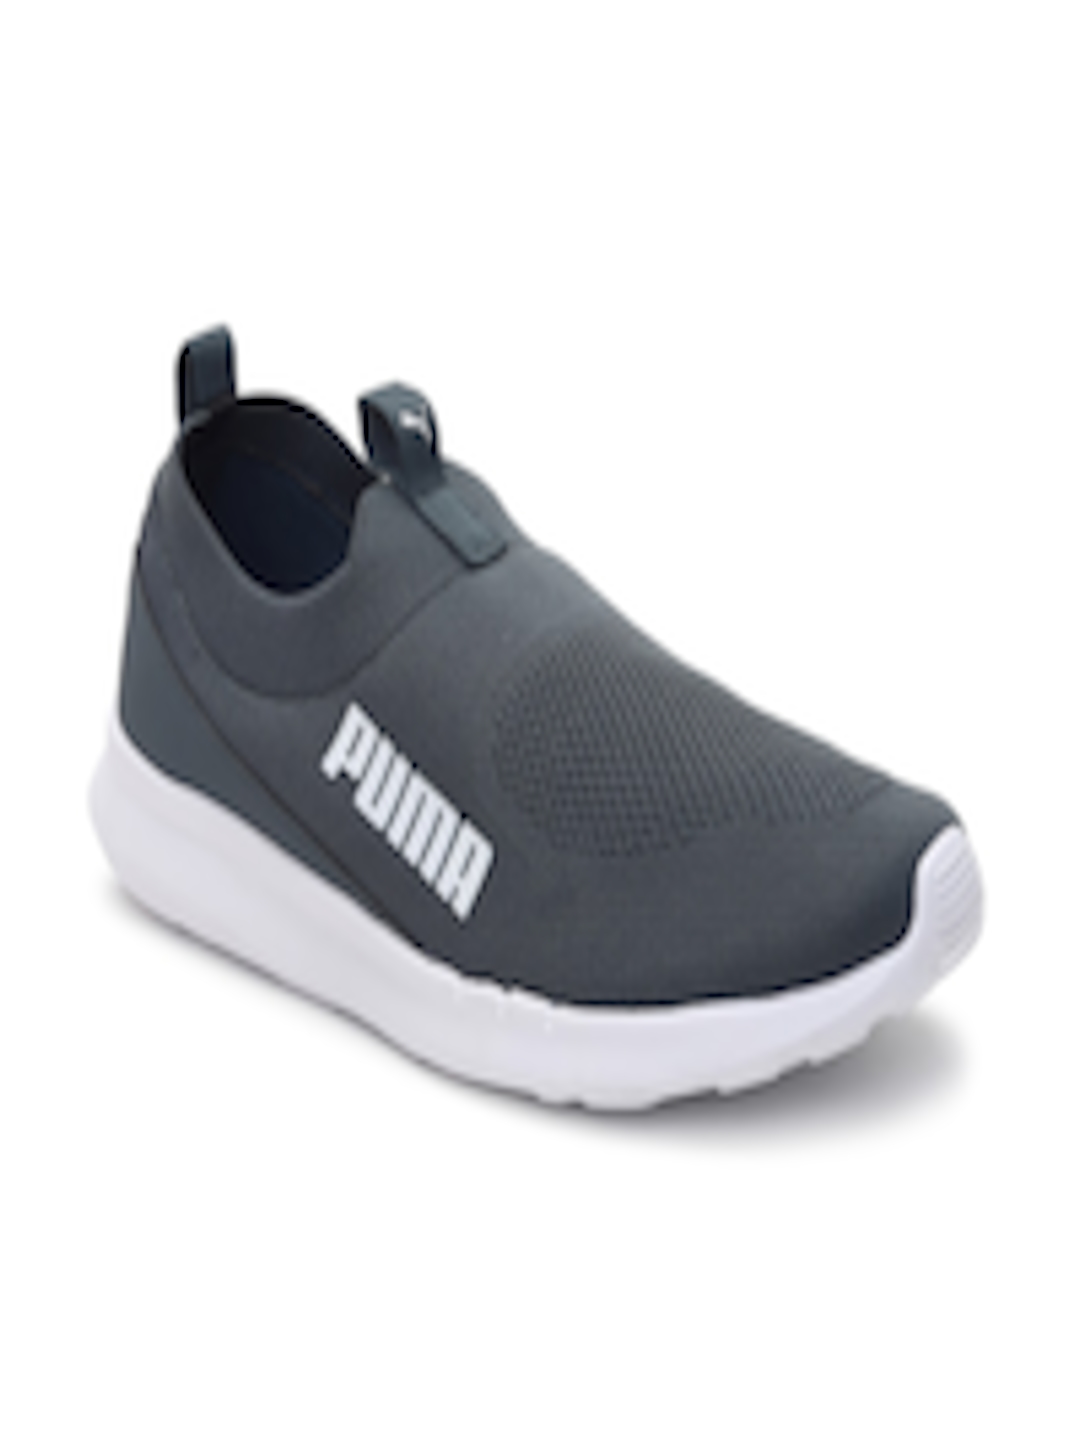 Buy Puma Men Grey Slip On Sneakers - Casual Shoes for Men 16864398 | Myntra